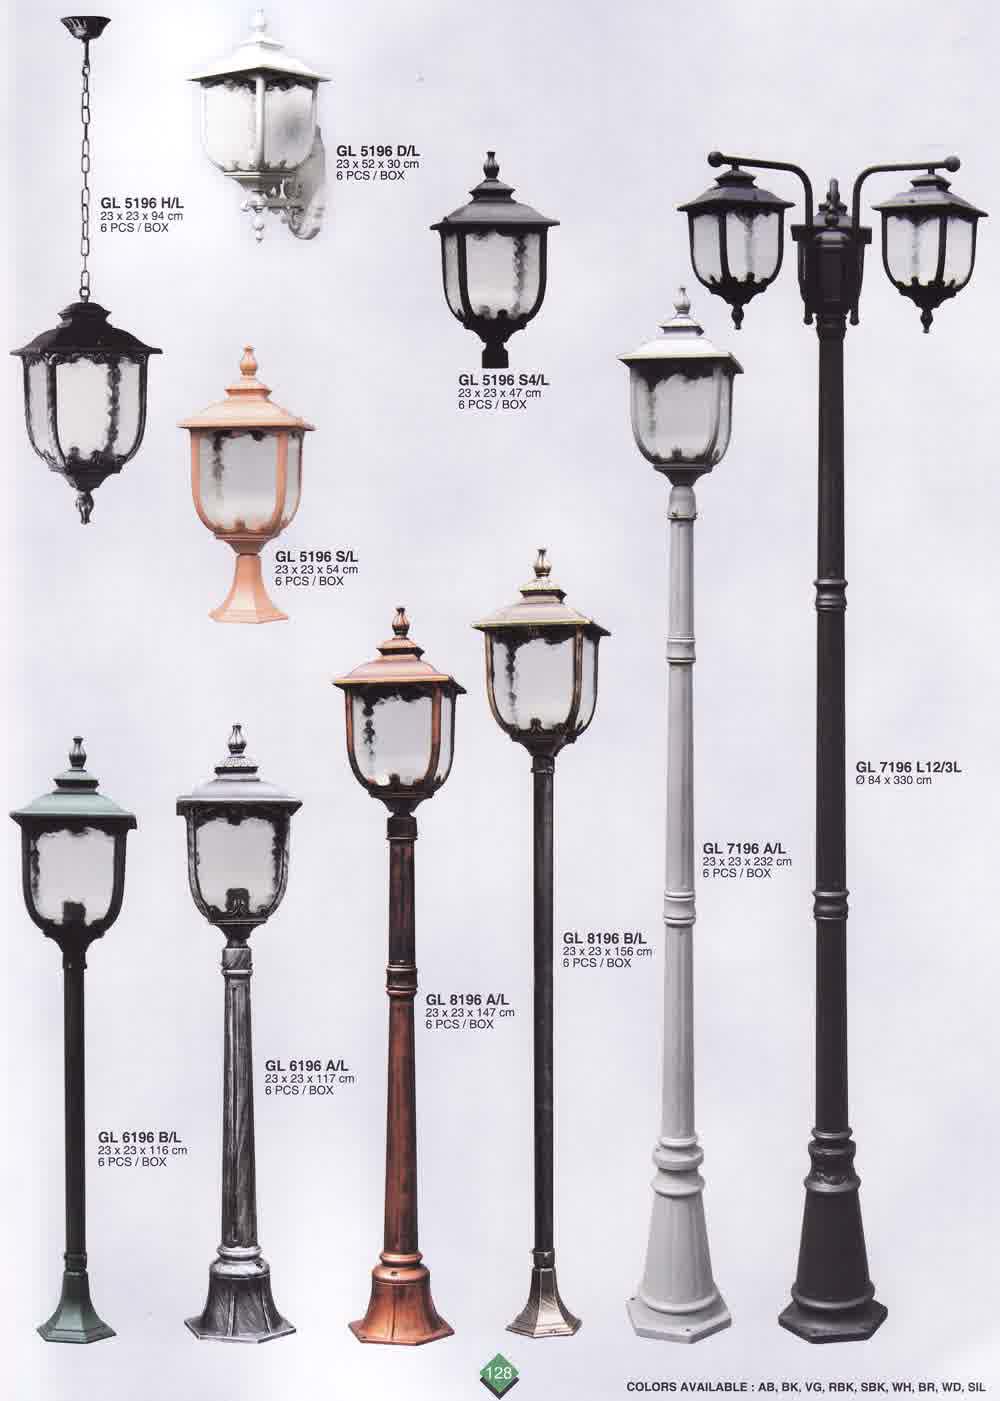 Desain Tiang Lampu Taman Menarik Lengkap - Aneka Lampu Lengkap: LED